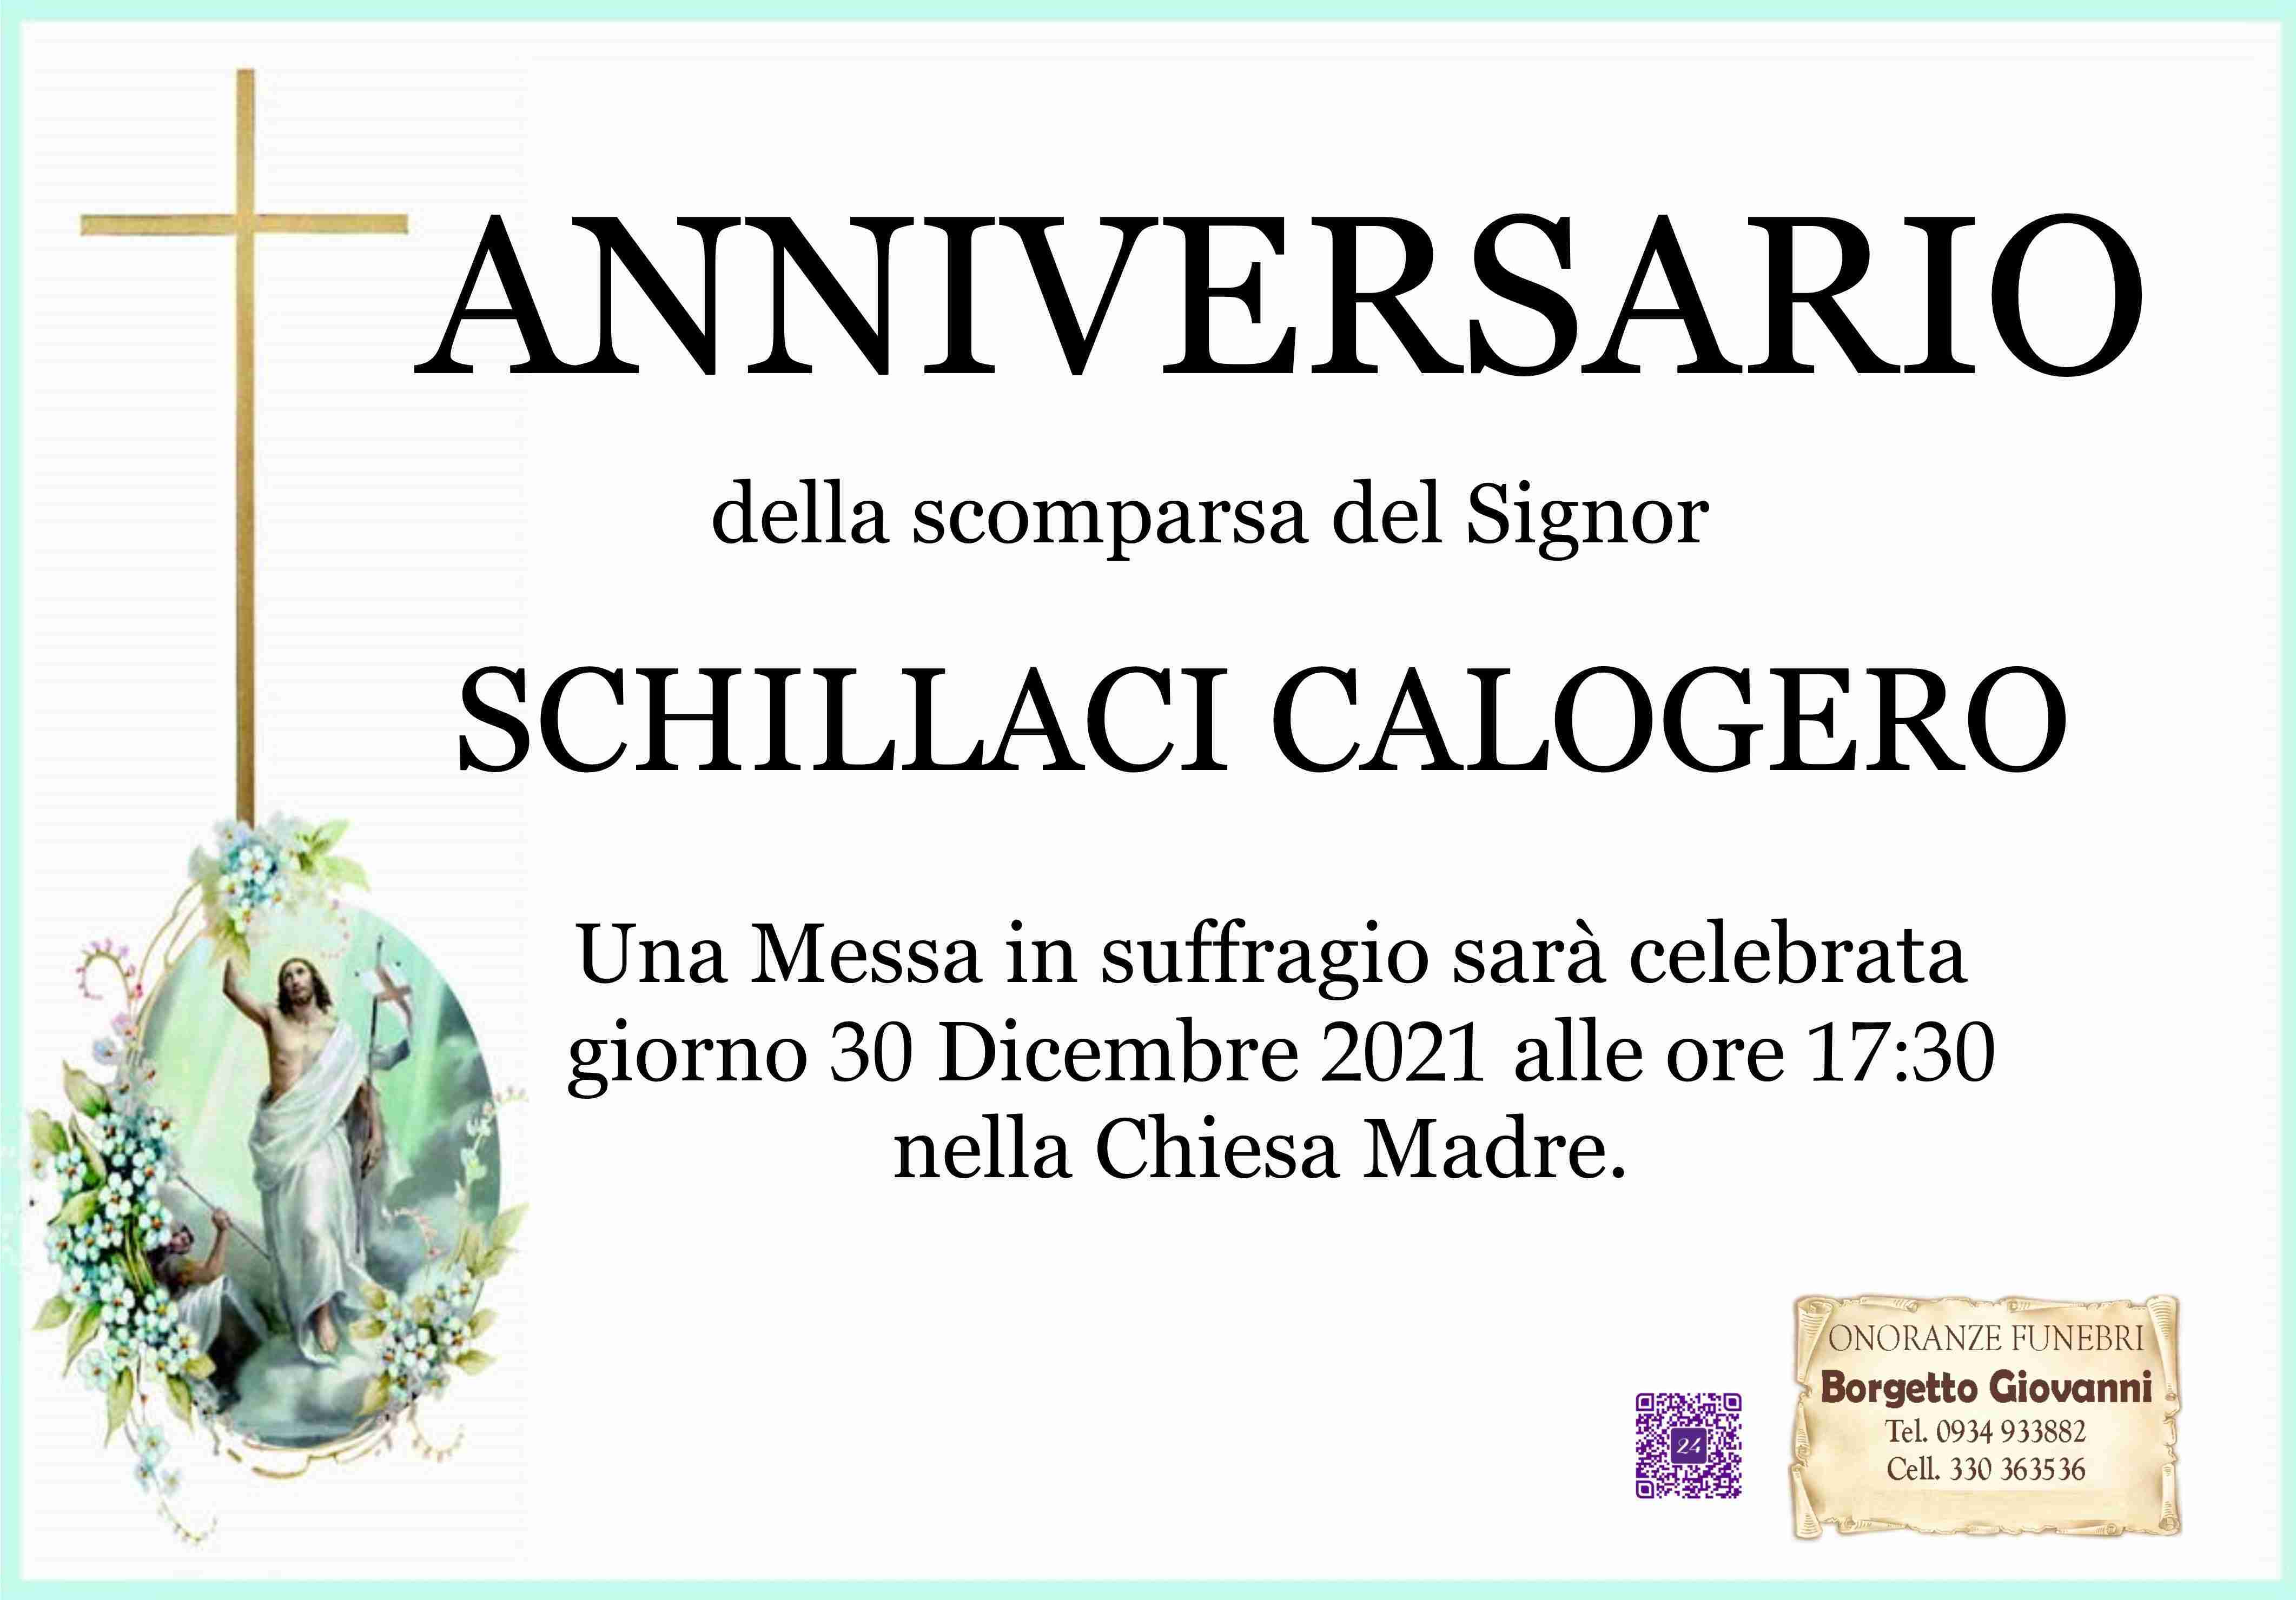 Calogero Schillaci